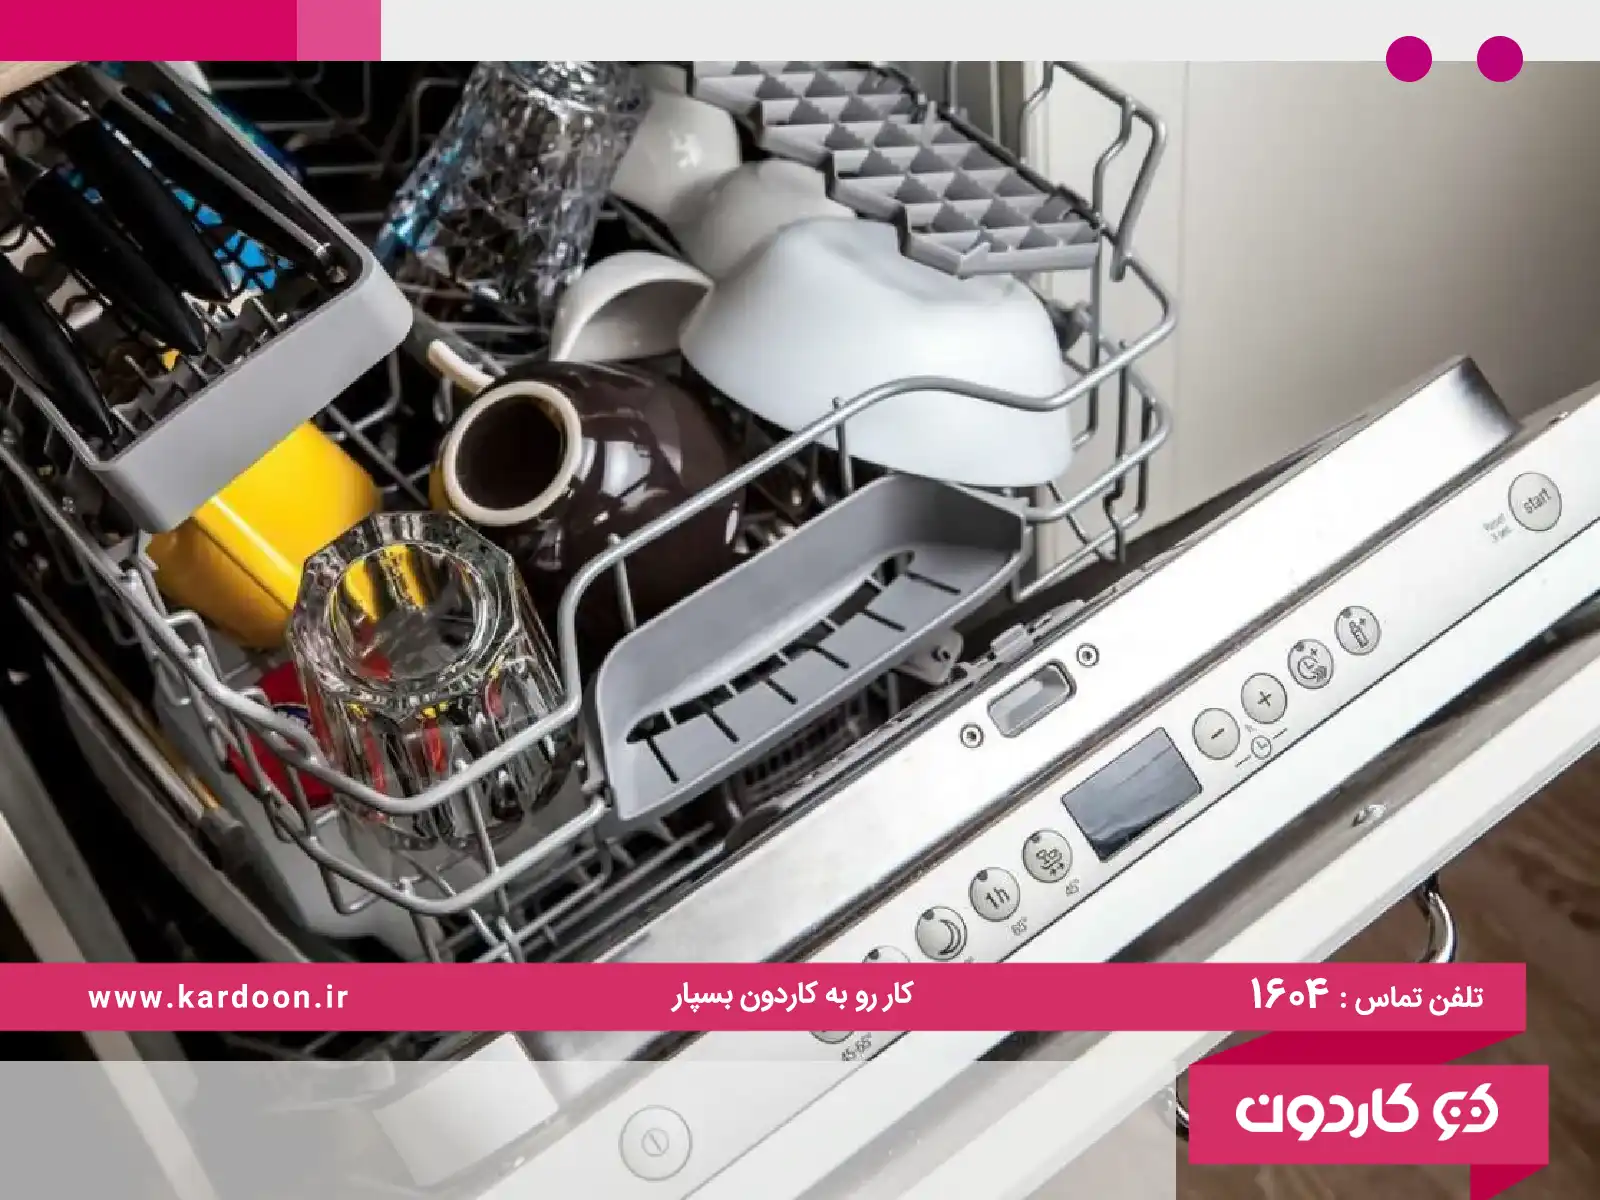 Methods of resetting the dishwasher